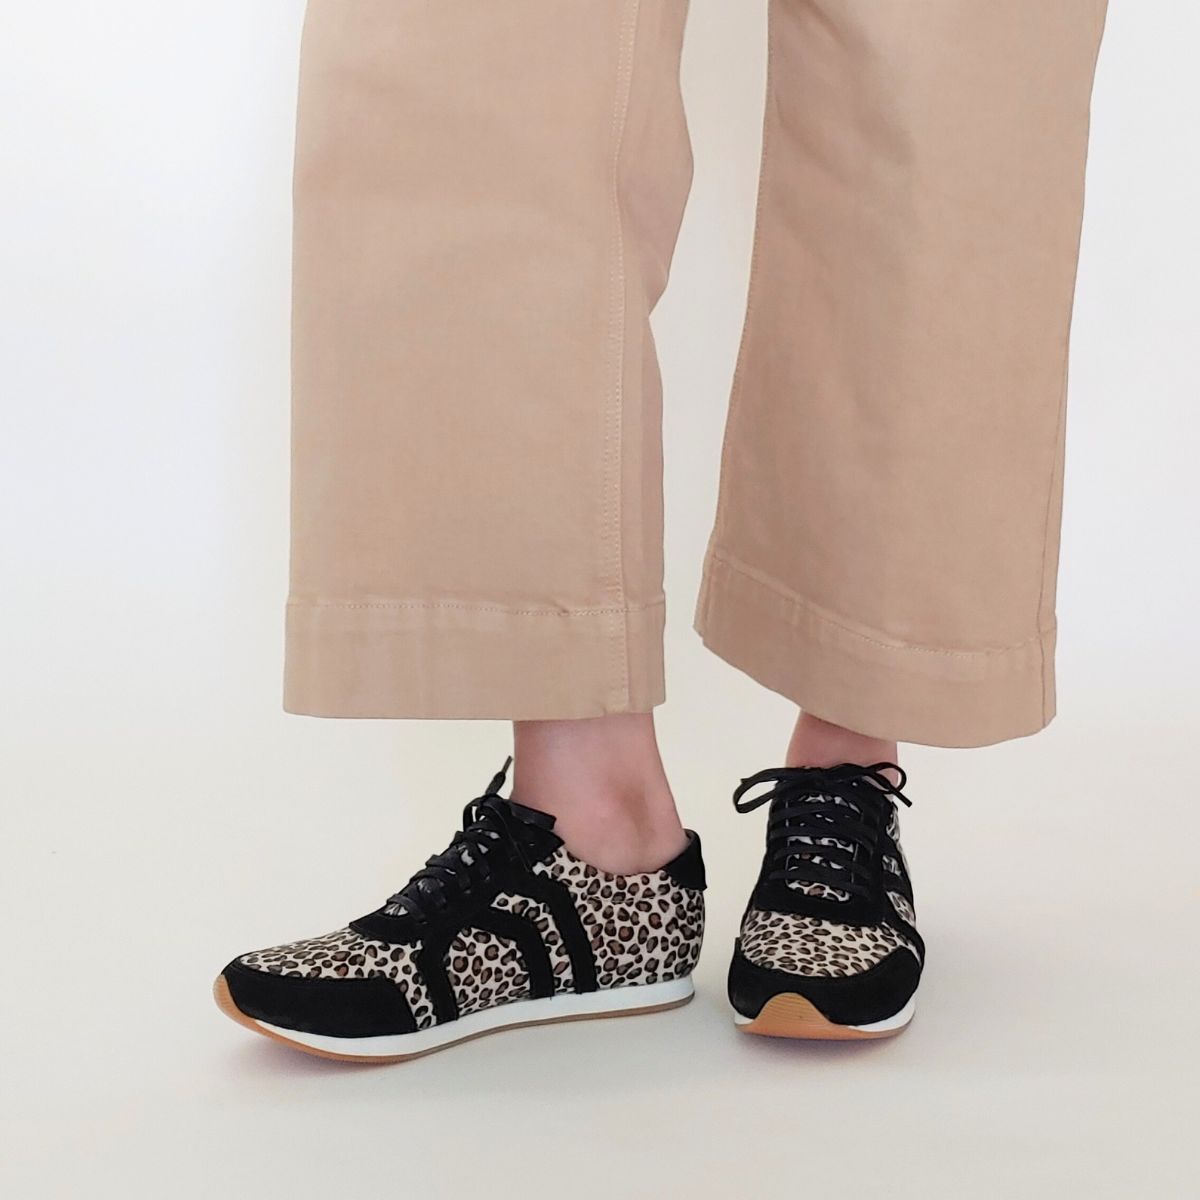 Jessie Sneaker in Leopard Print with Black Nubuck (PREORDER)